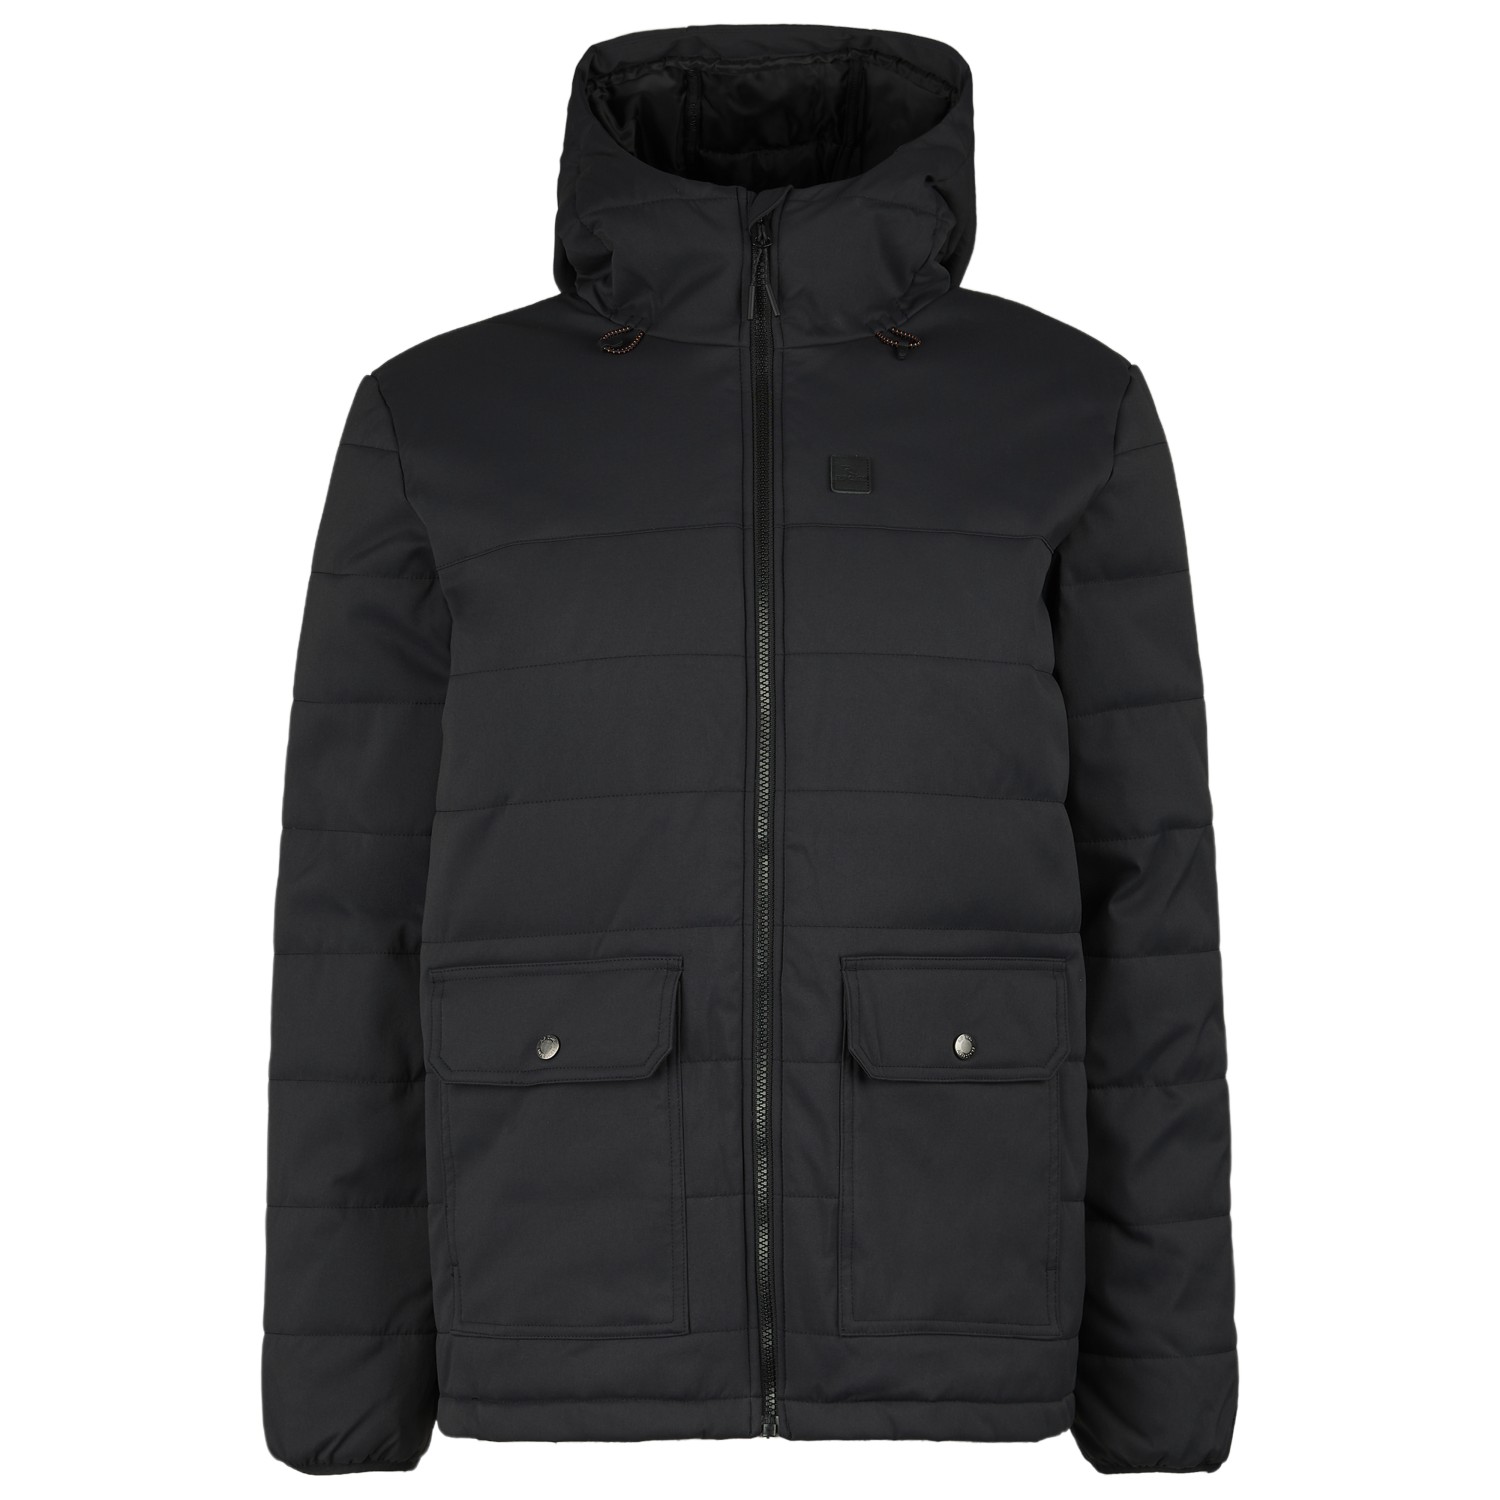 Зимняя куртка Rip Curl Anti Series Ridge, черный куртка rip curl anti series heatseeker jk пол м цвет 226 camo размерxl